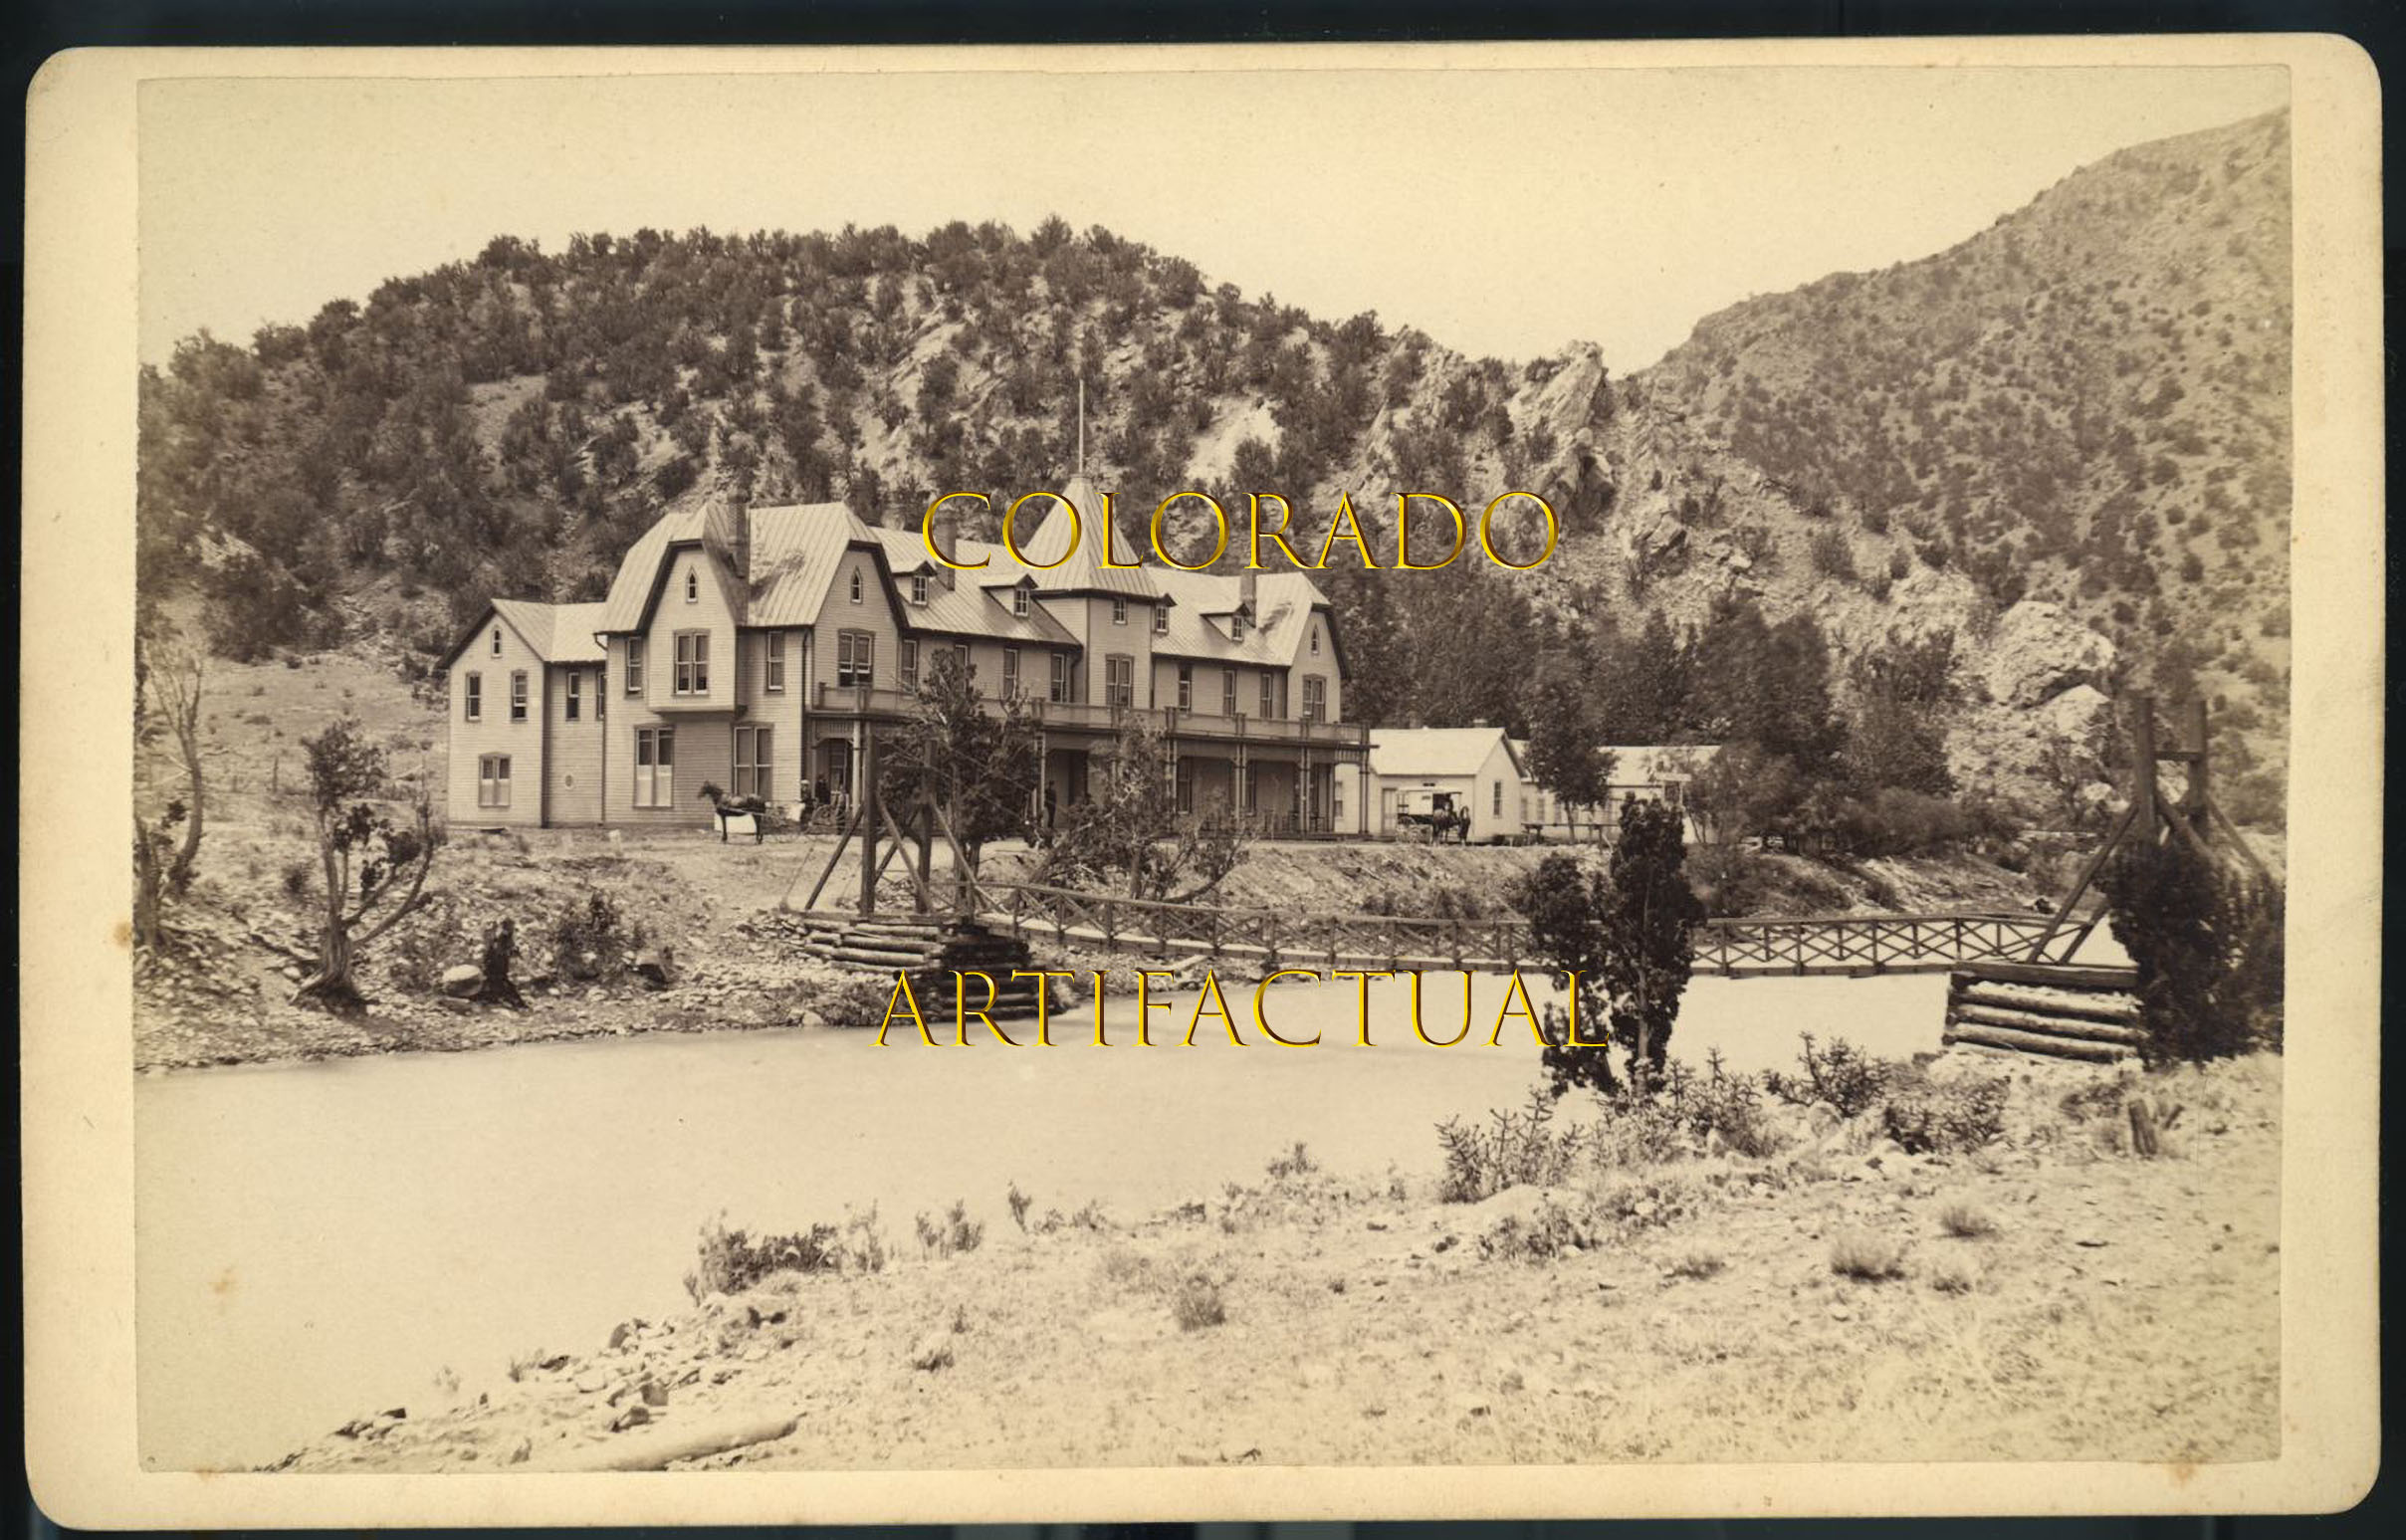 Canon City Colorado Hotel original cabinet card photograph by Charles E. Emery 1885